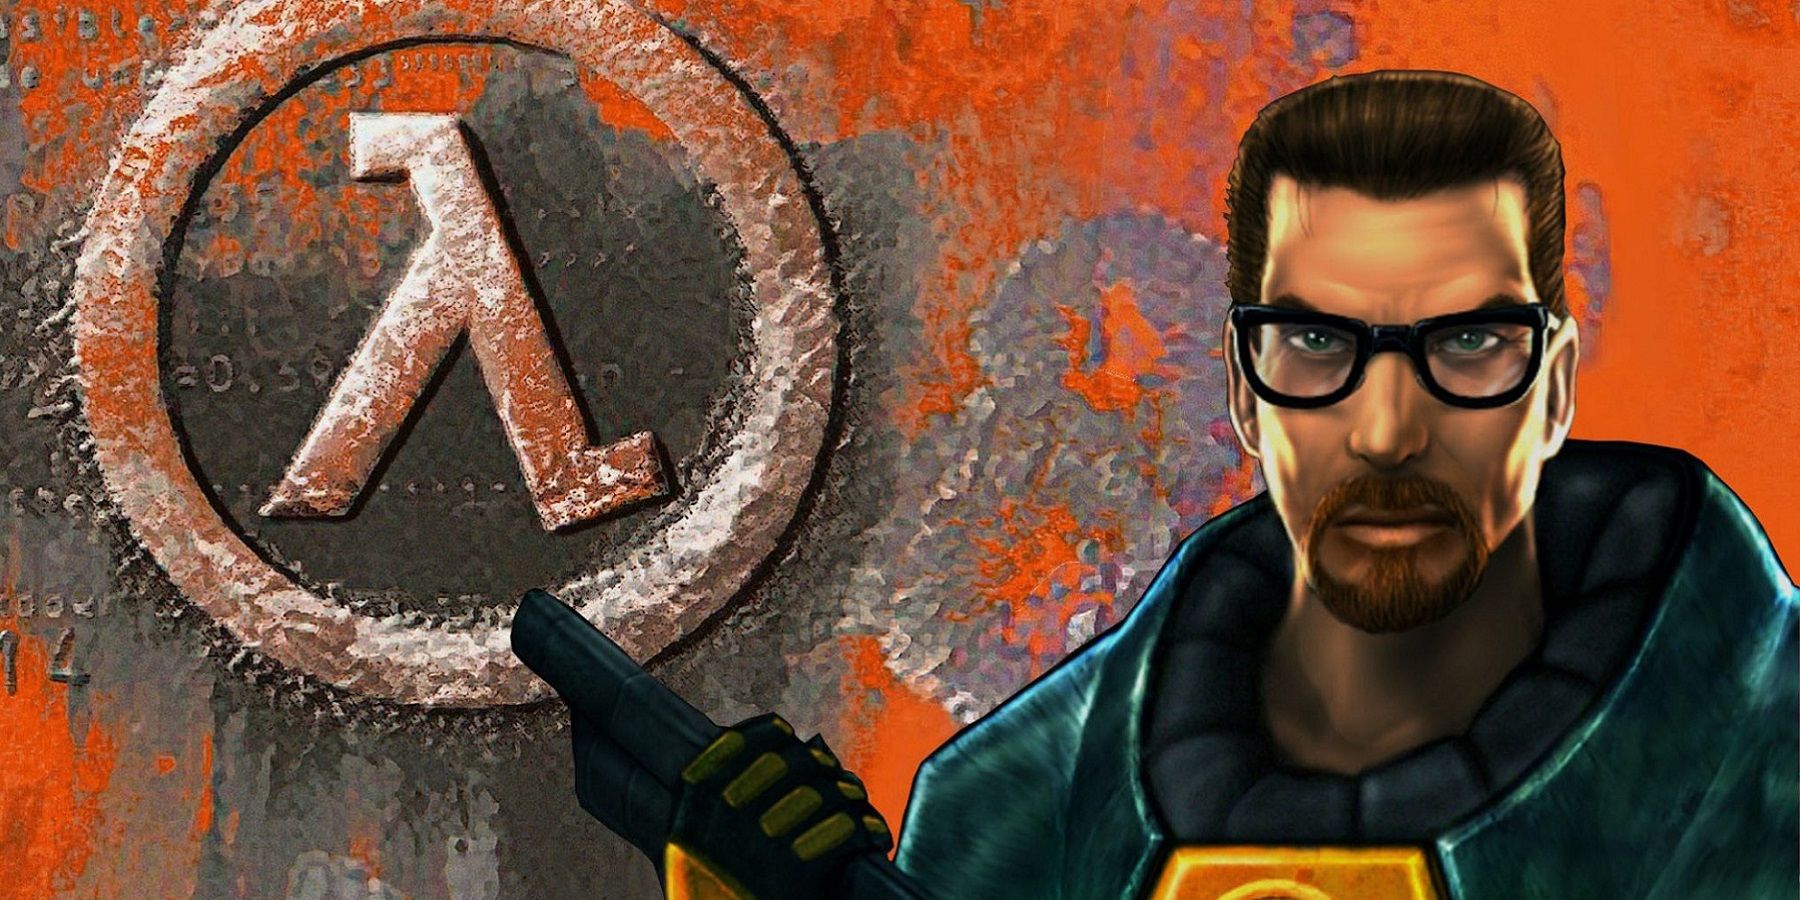 The Half-Life lambda logo on an orange background with Gordon Freeman holding a shotgun in the foreground.